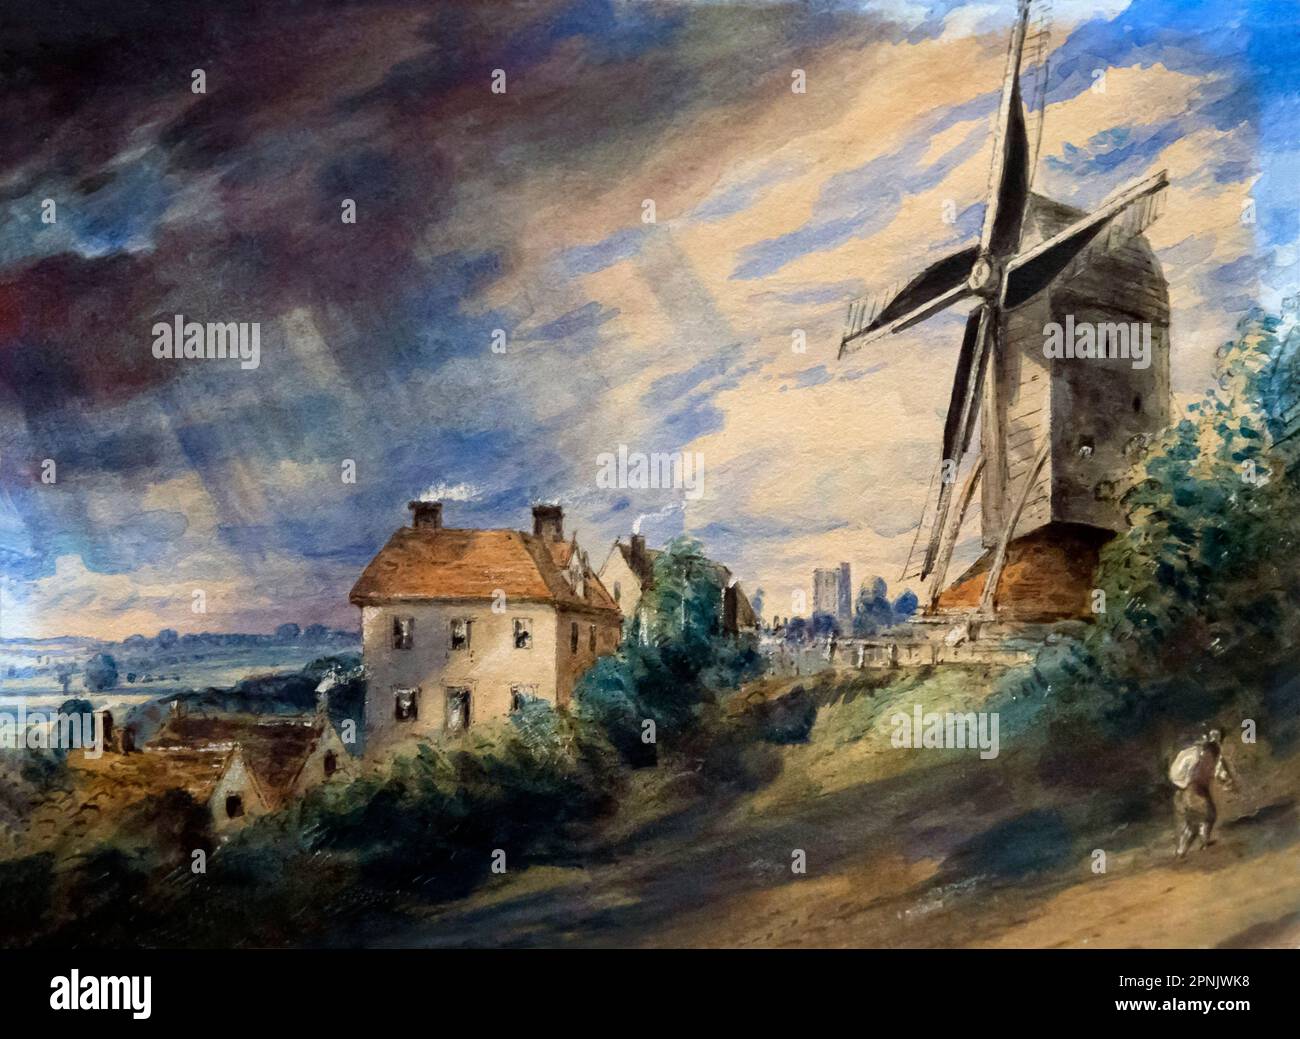 Stanway Mill, vicino a Colchester, John Constable, 1833-1835, Courtauld Gallery, Londra, Inghilterra, Regno Unito, Foto Stock